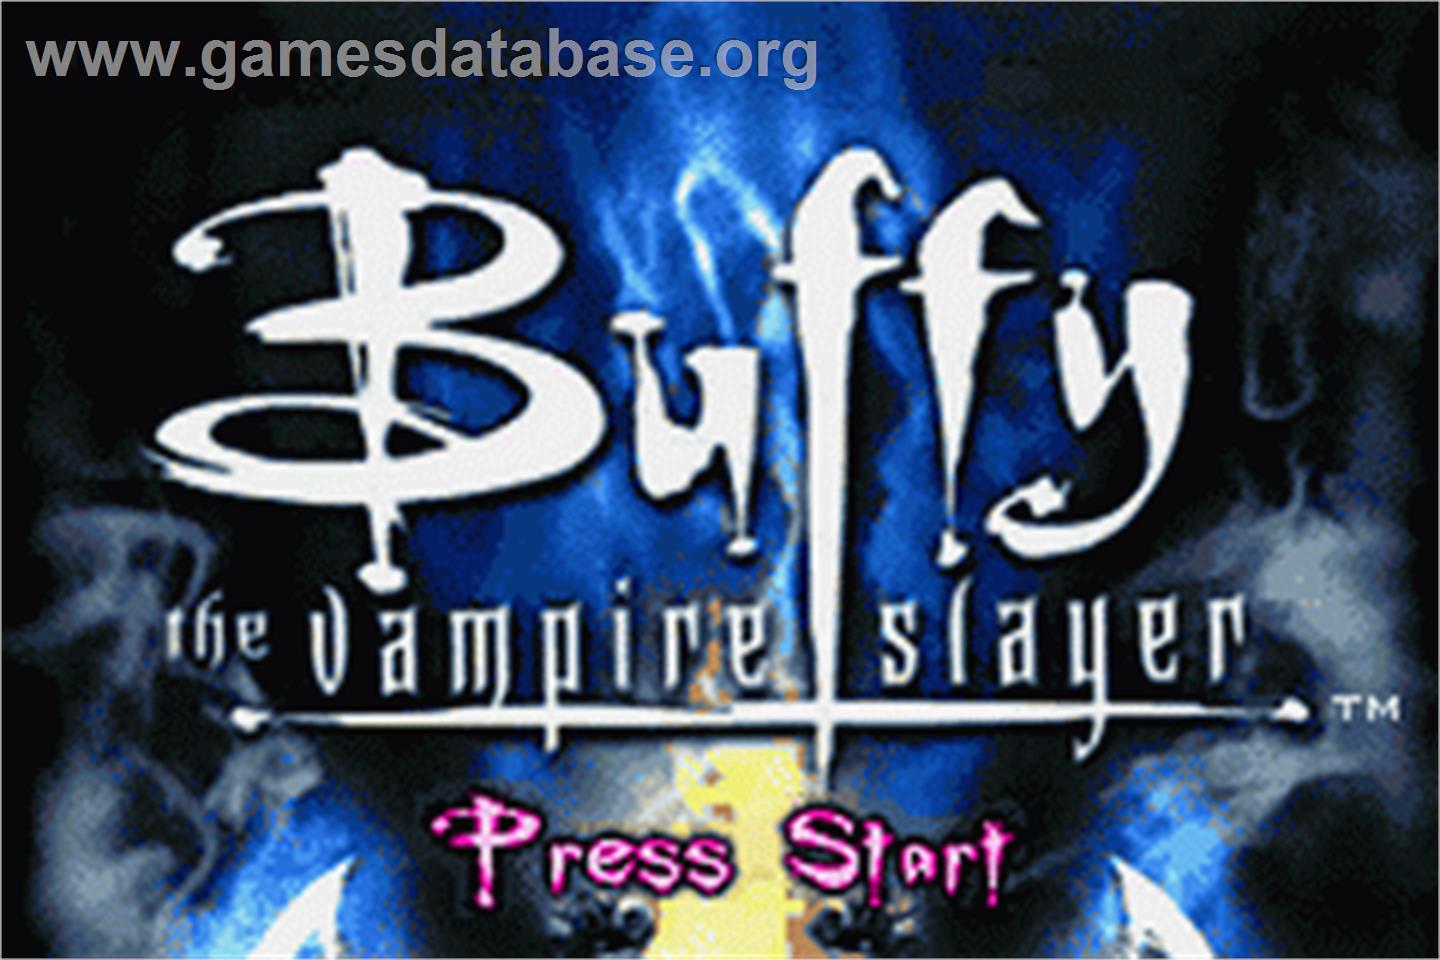 Buffy the Vampire Slayer: Wrath of the Darkhul King - Nintendo Game Boy Advance - Artwork - Title Screen